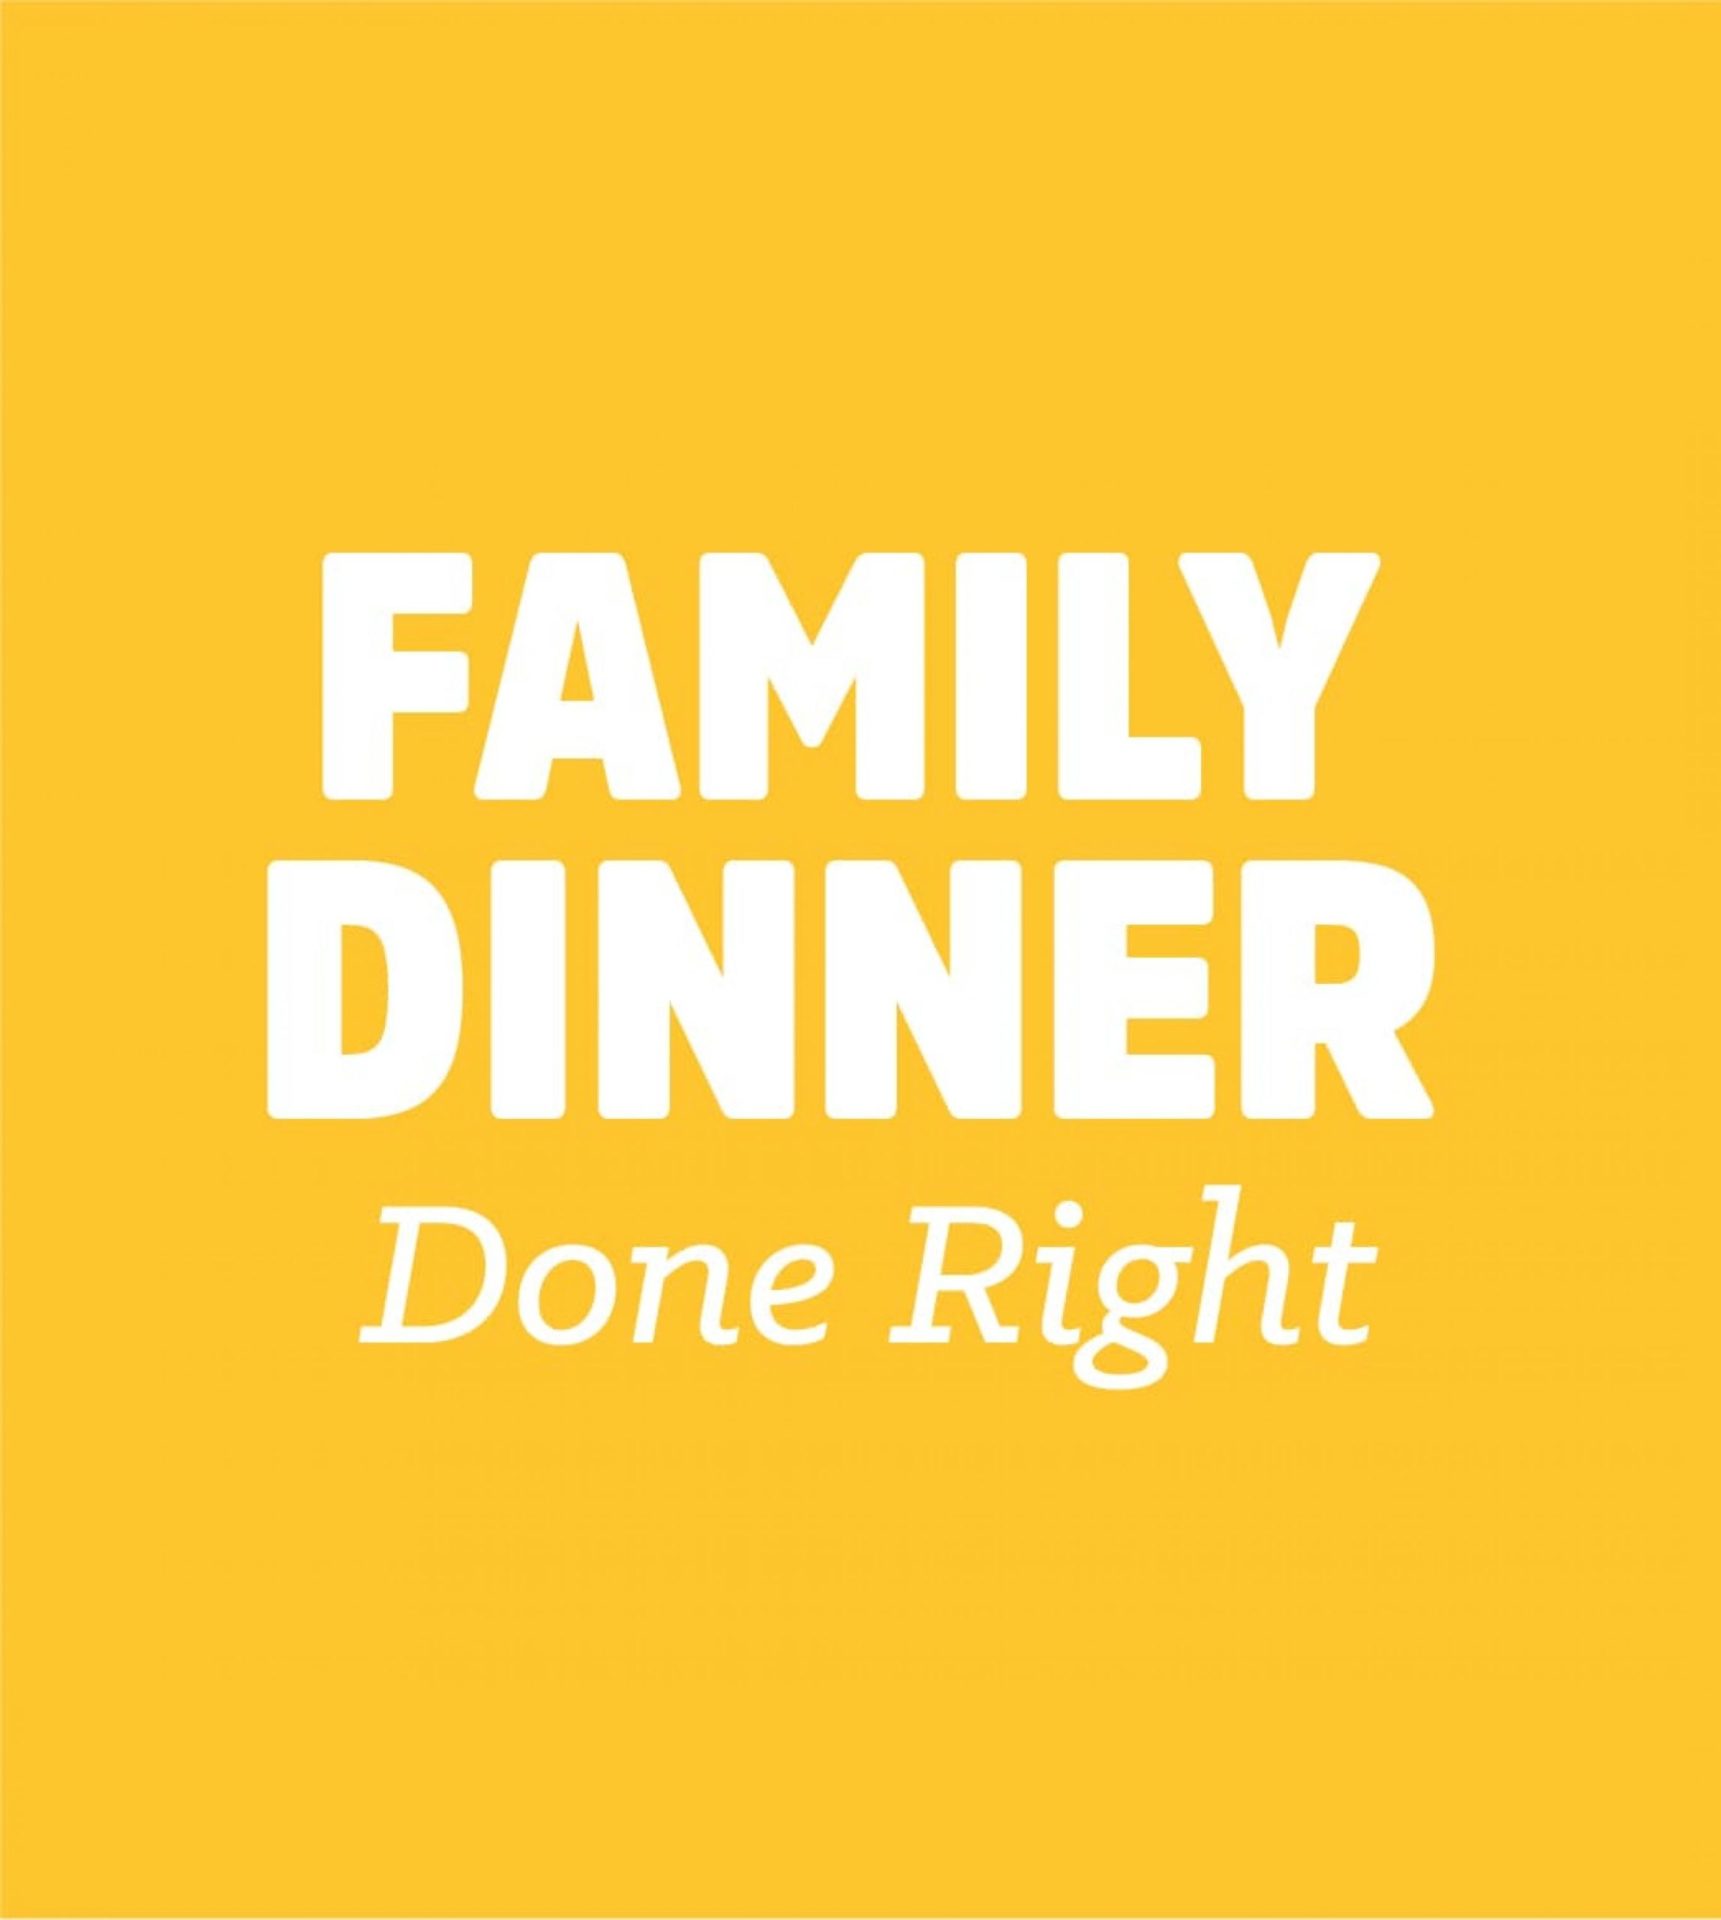 FAMILY DINNER Done Right